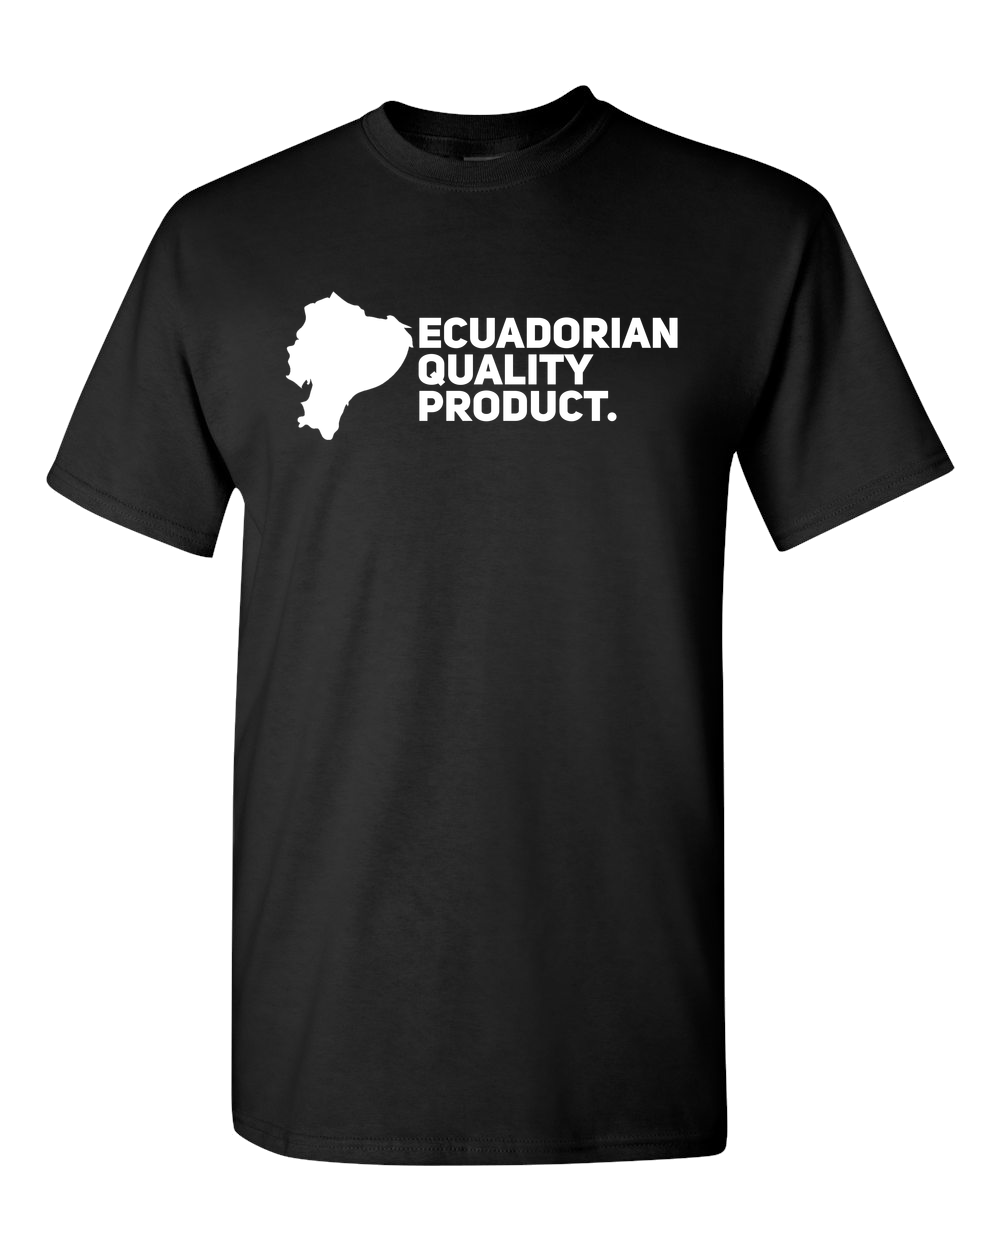 ECUADOR Adult Unisex T-Shirt Funny